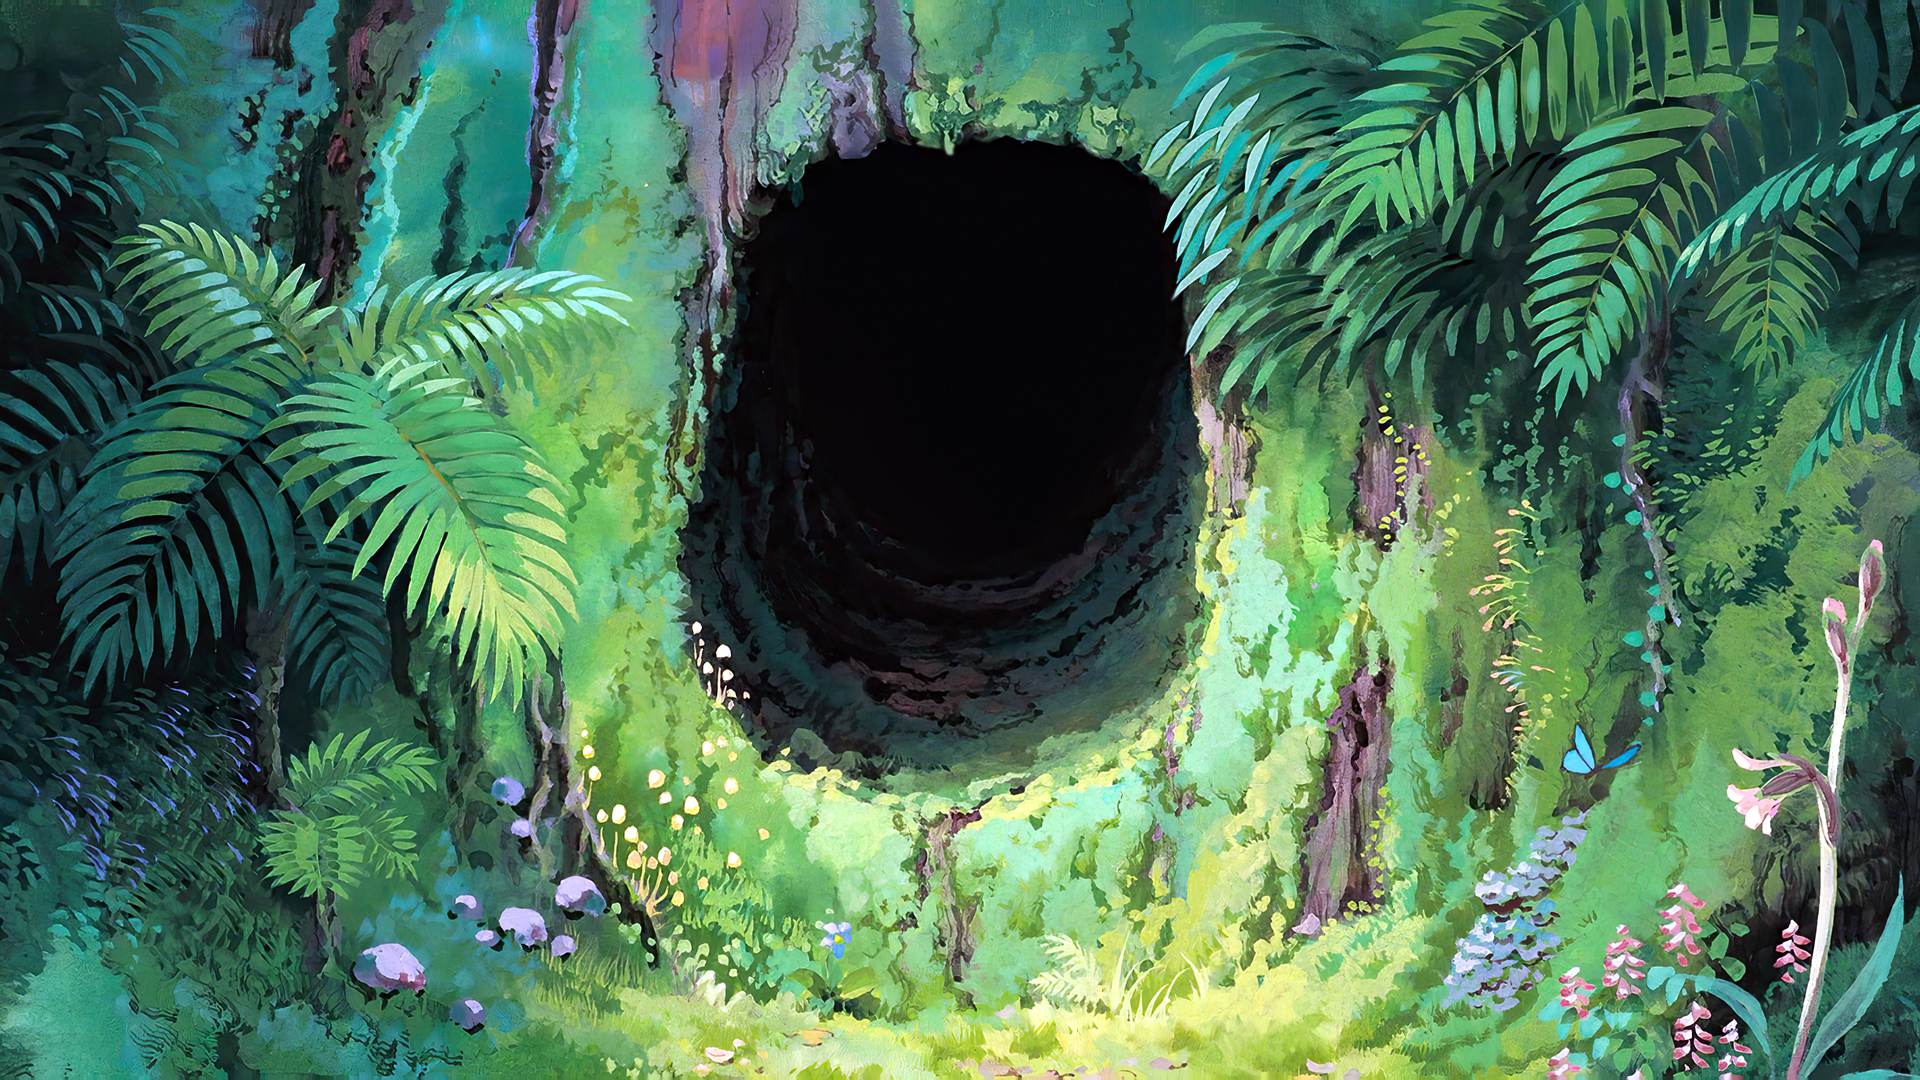 My Neighbor Totoro Animated Movies Anime Animation Film Stills Studio Ghibli Hayao Miyazaki Tunnel P 1920x1080